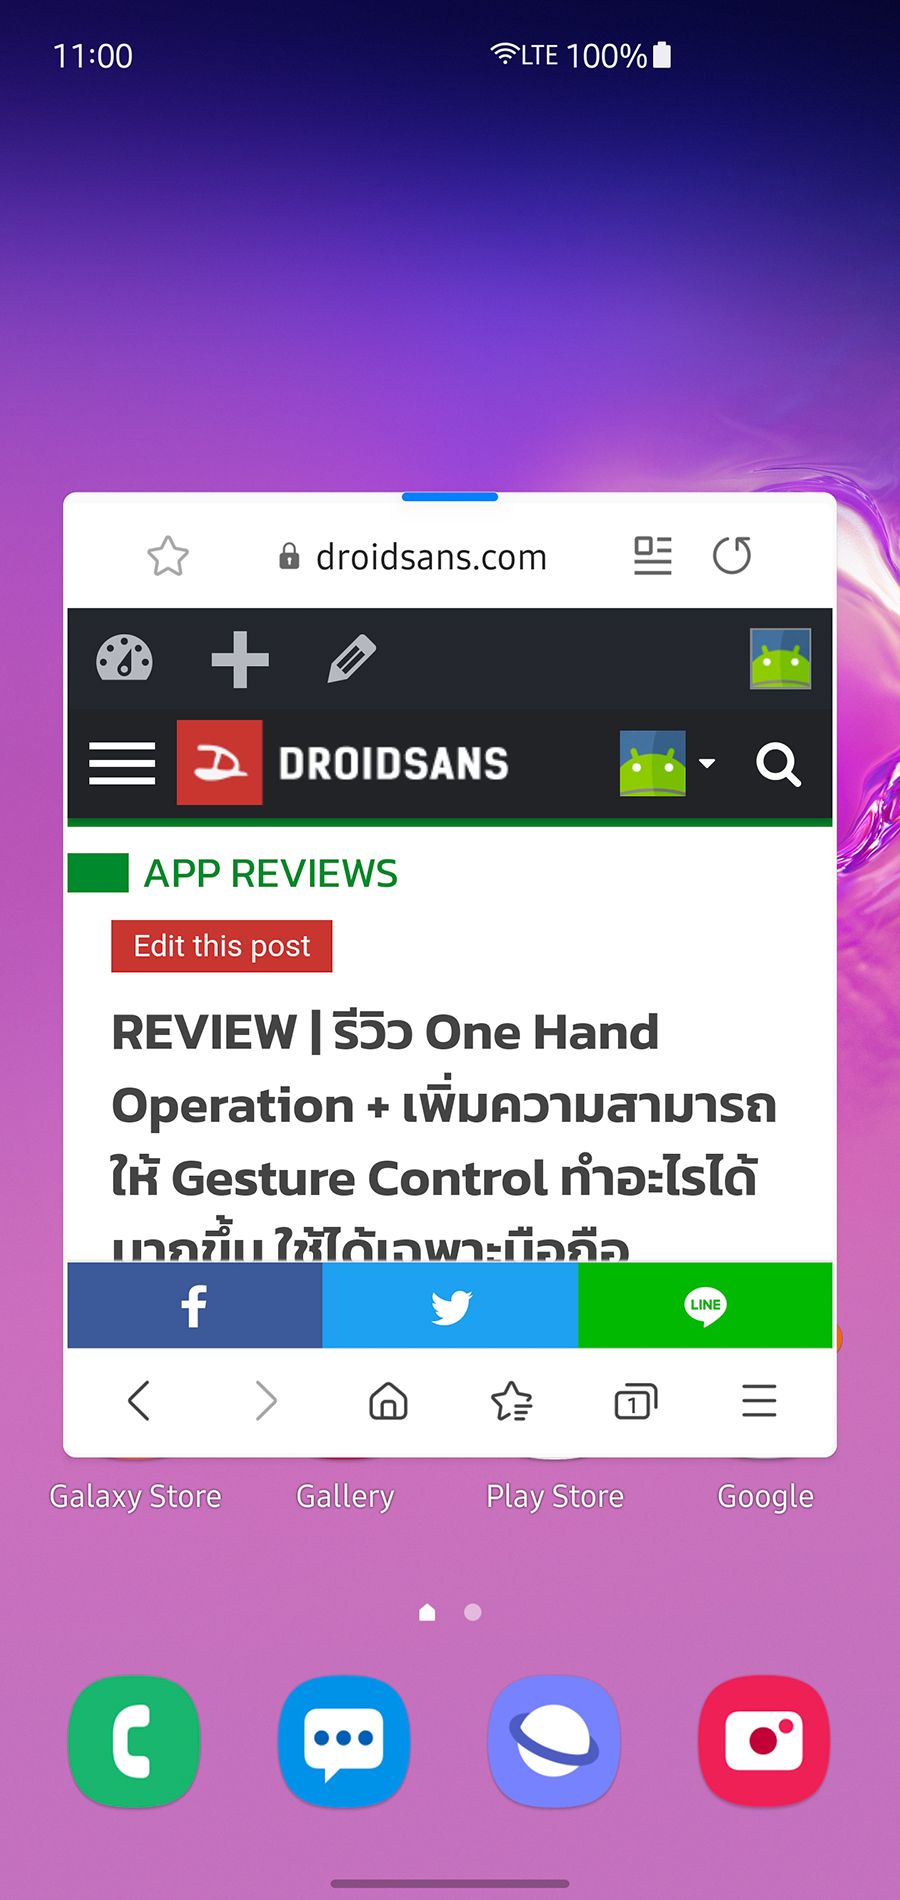 Tips | เปิดแอปแบบ Pop-Up View บนมือถือ Samsung ง่าย ๆ ด้วย One Hand Operation +